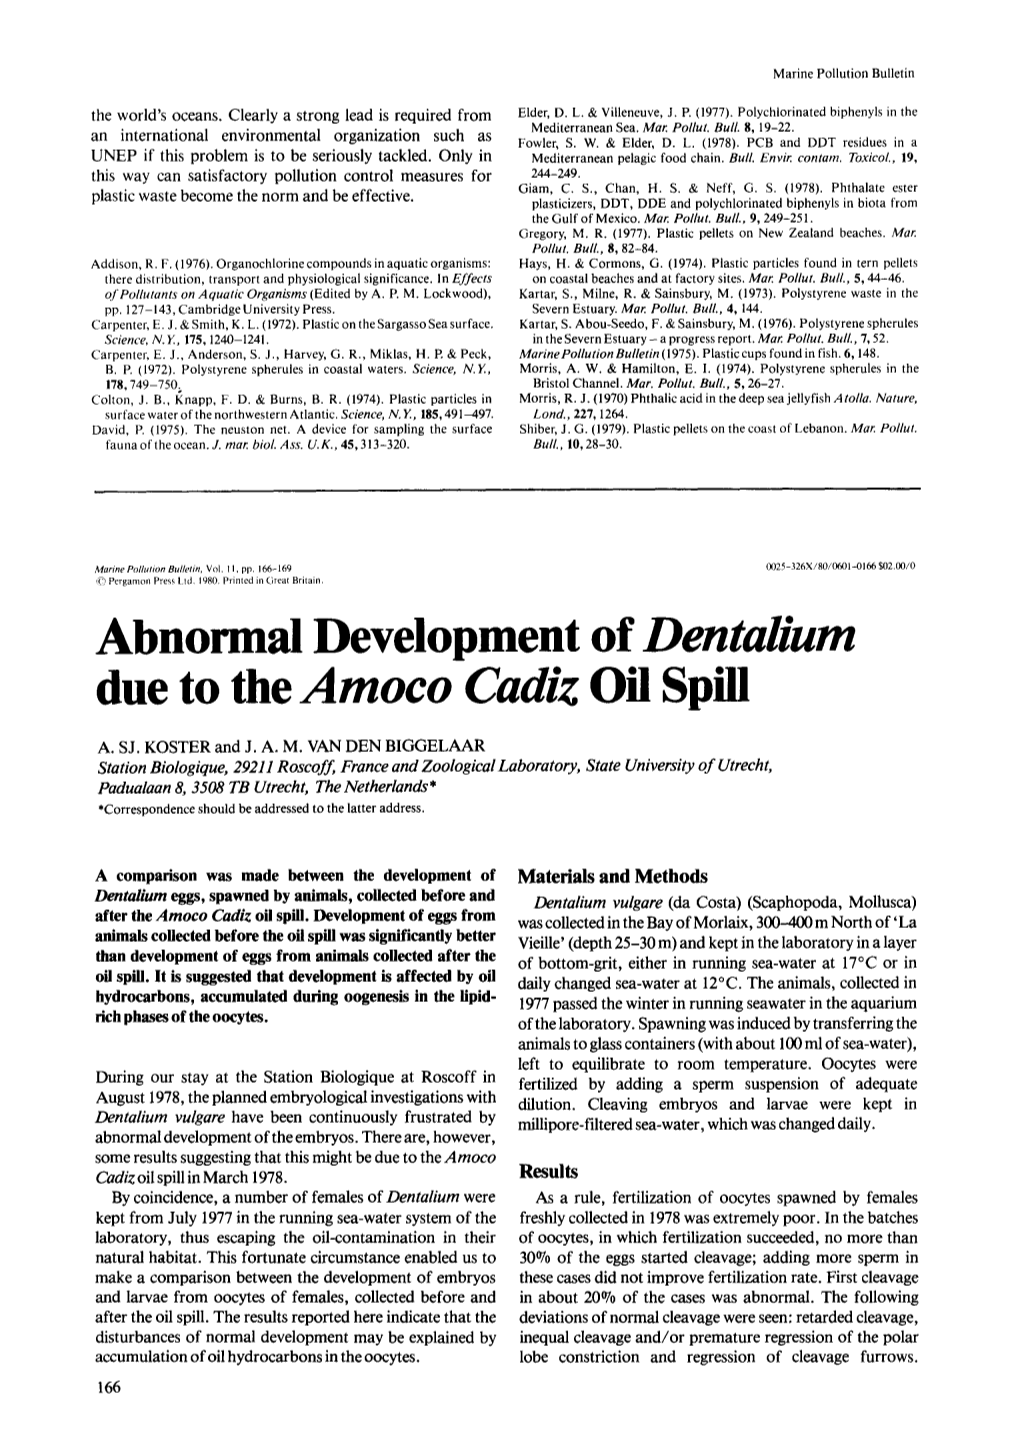 Abnormal Development of Dentalium Due to the Amoco Cadiz Oil Spill